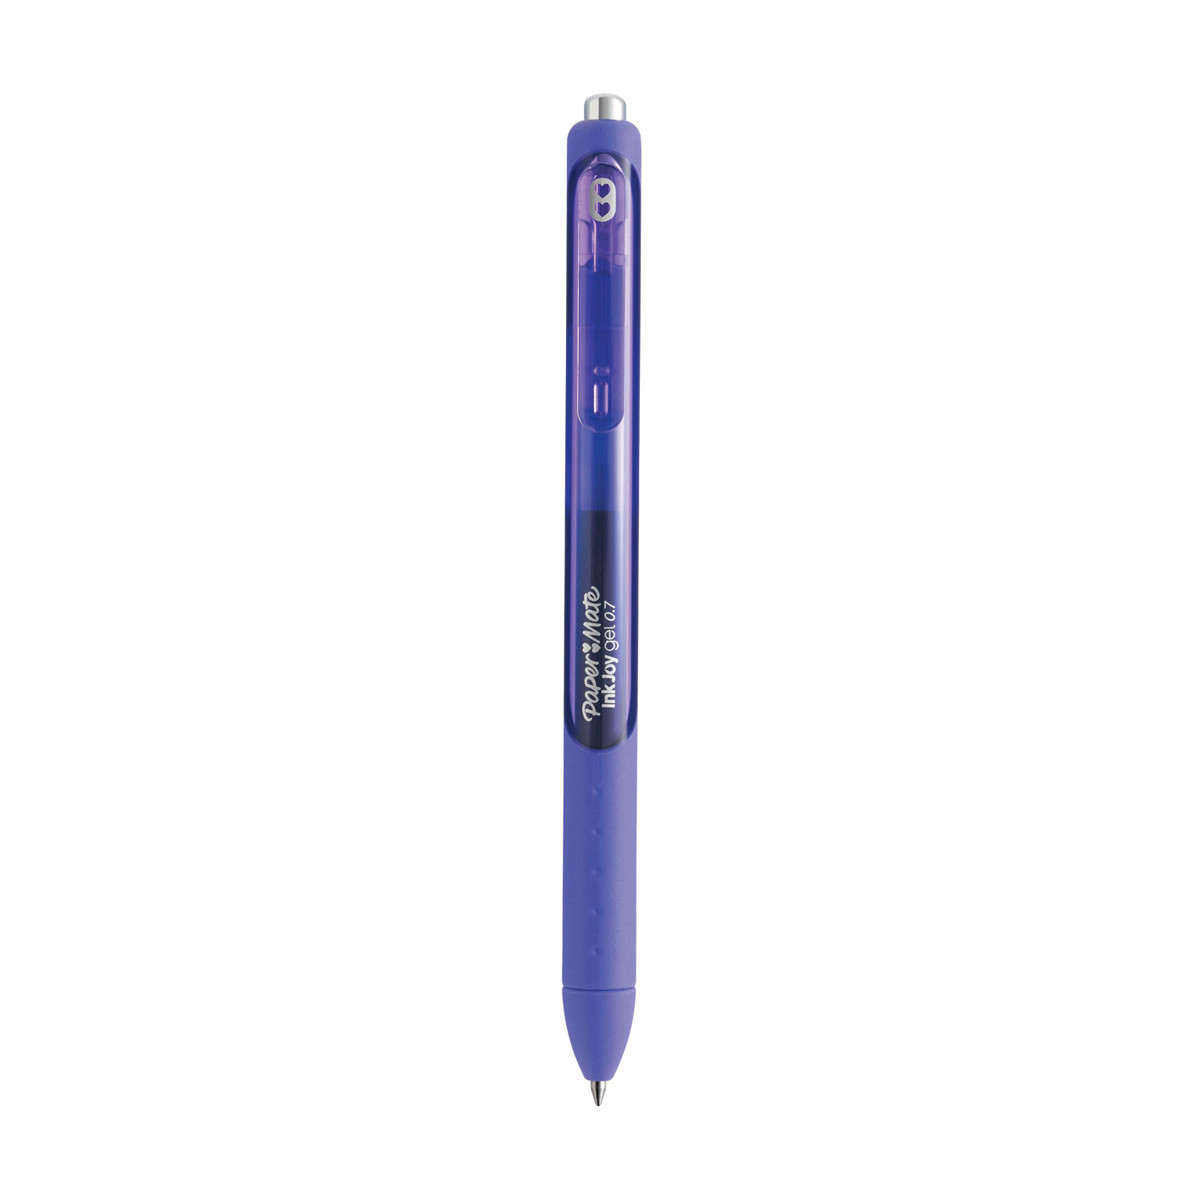 PaperMate InkJoy Gel Pen 0.7MM, 1 Count, Purple